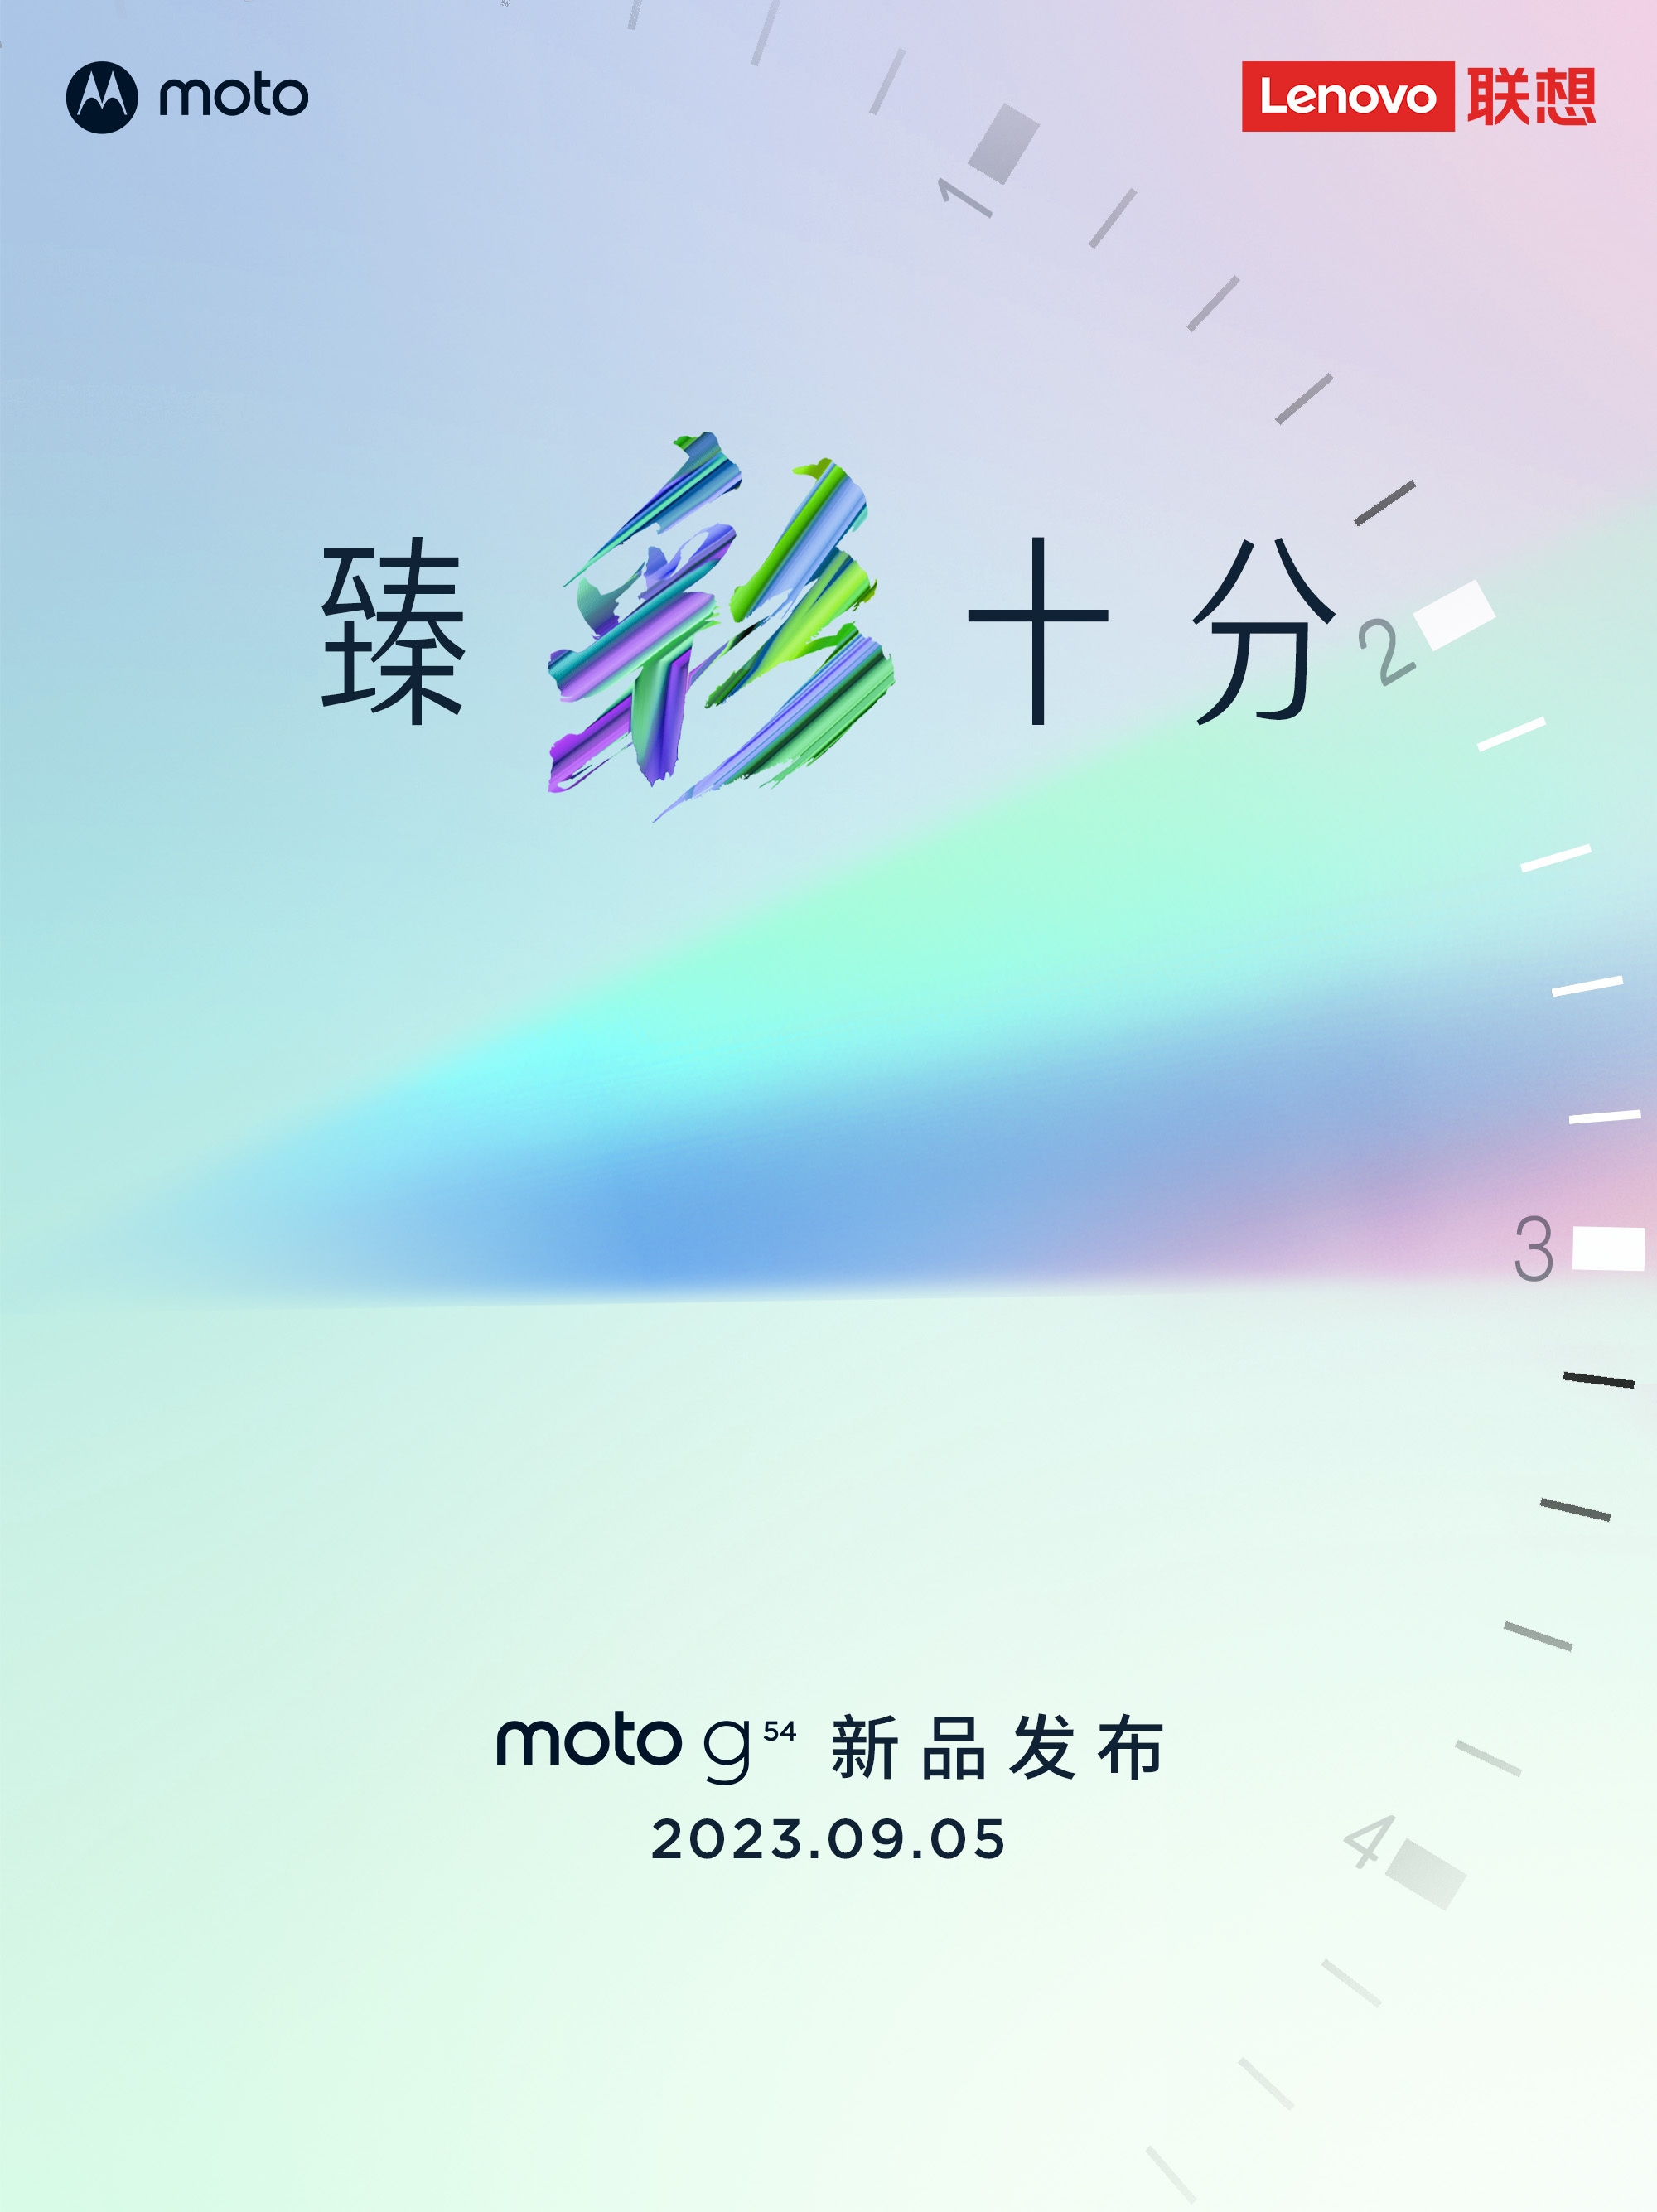 Moto G54 set to arrive on September 5